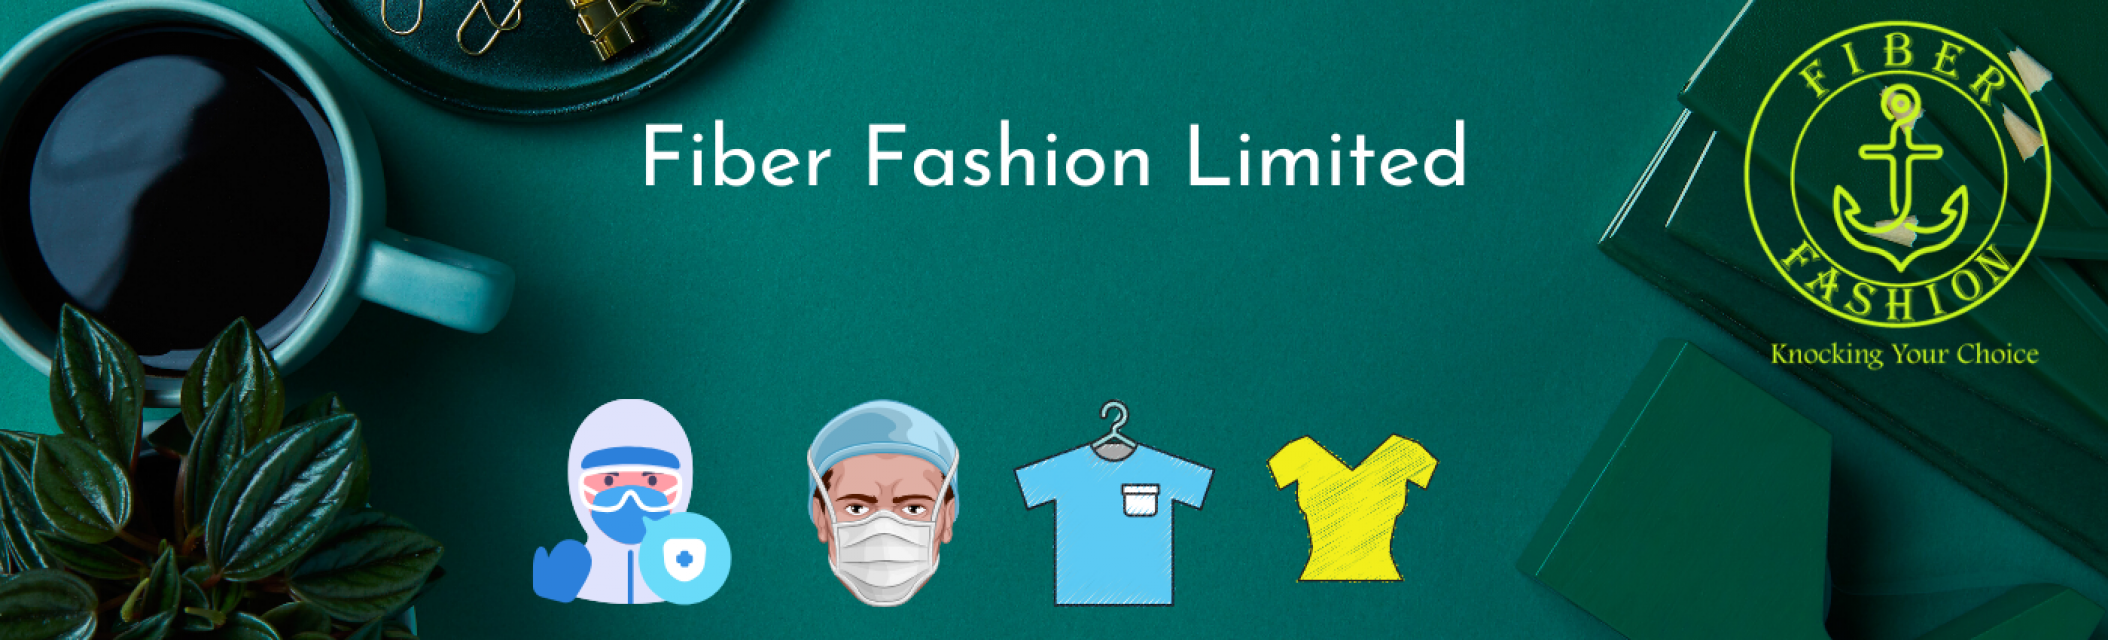 Fiber Fashion Limited